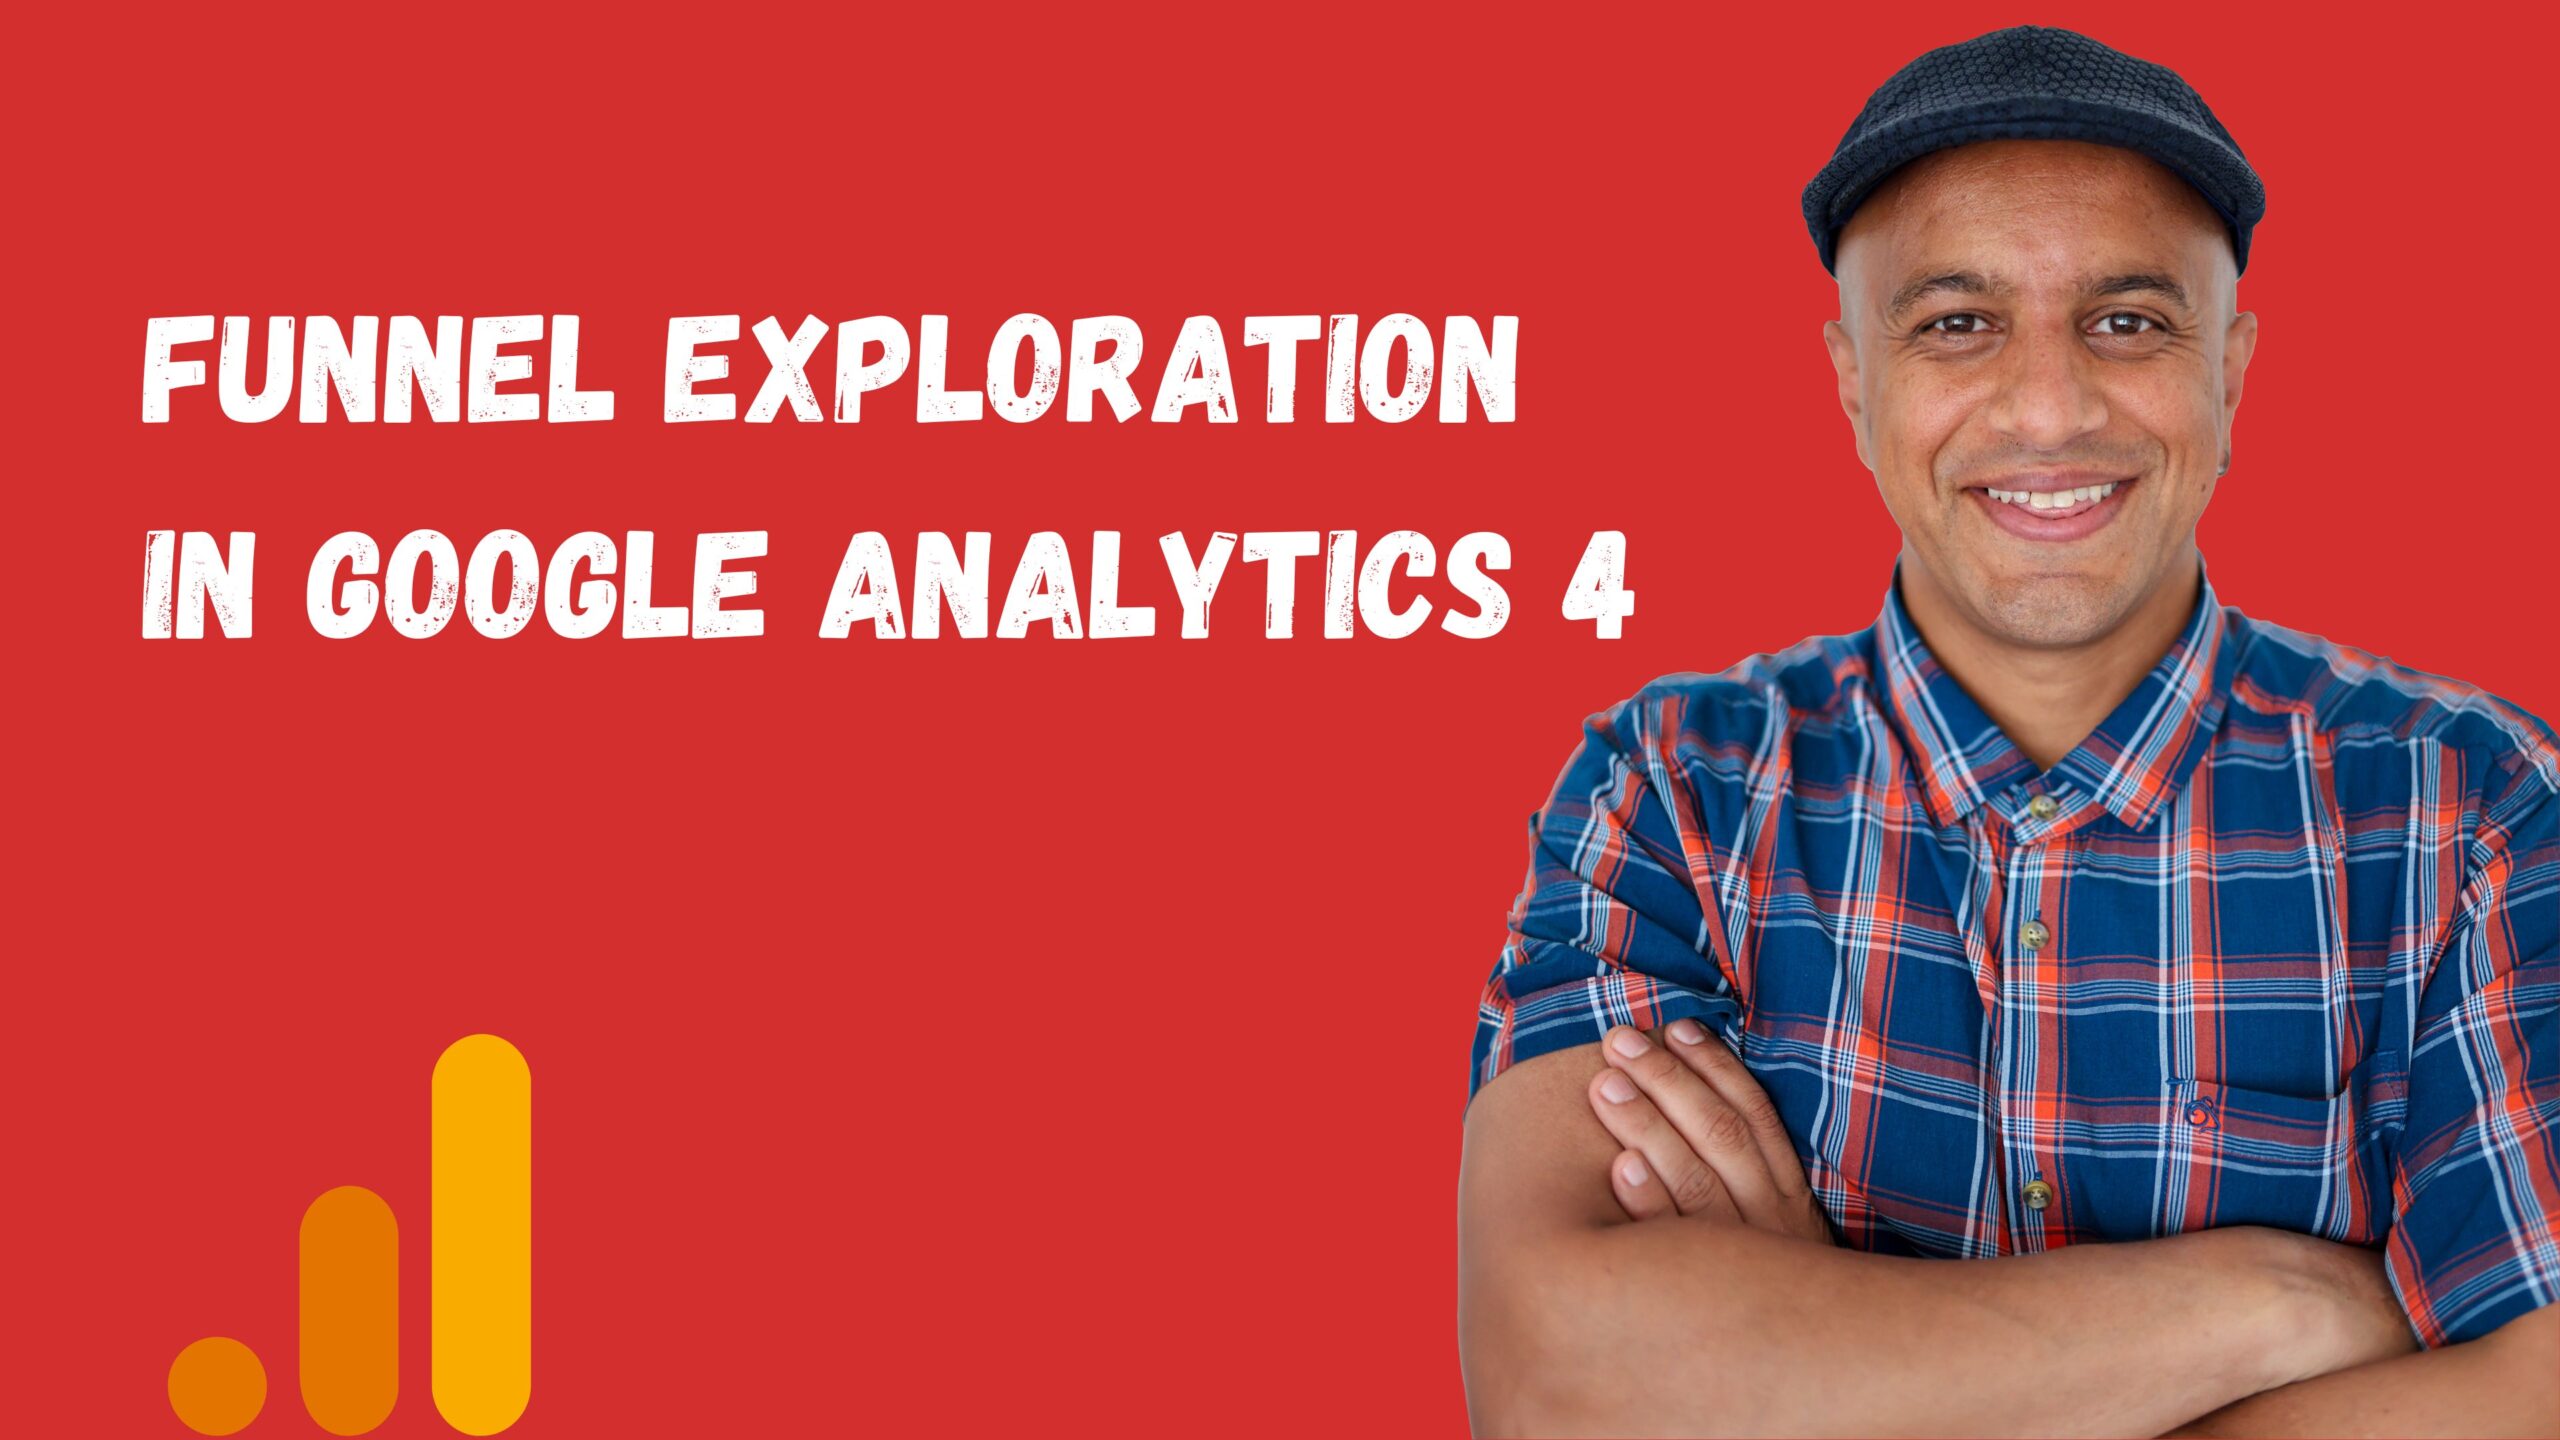 Funnel exploration in Google Analytics 4 (GA4)